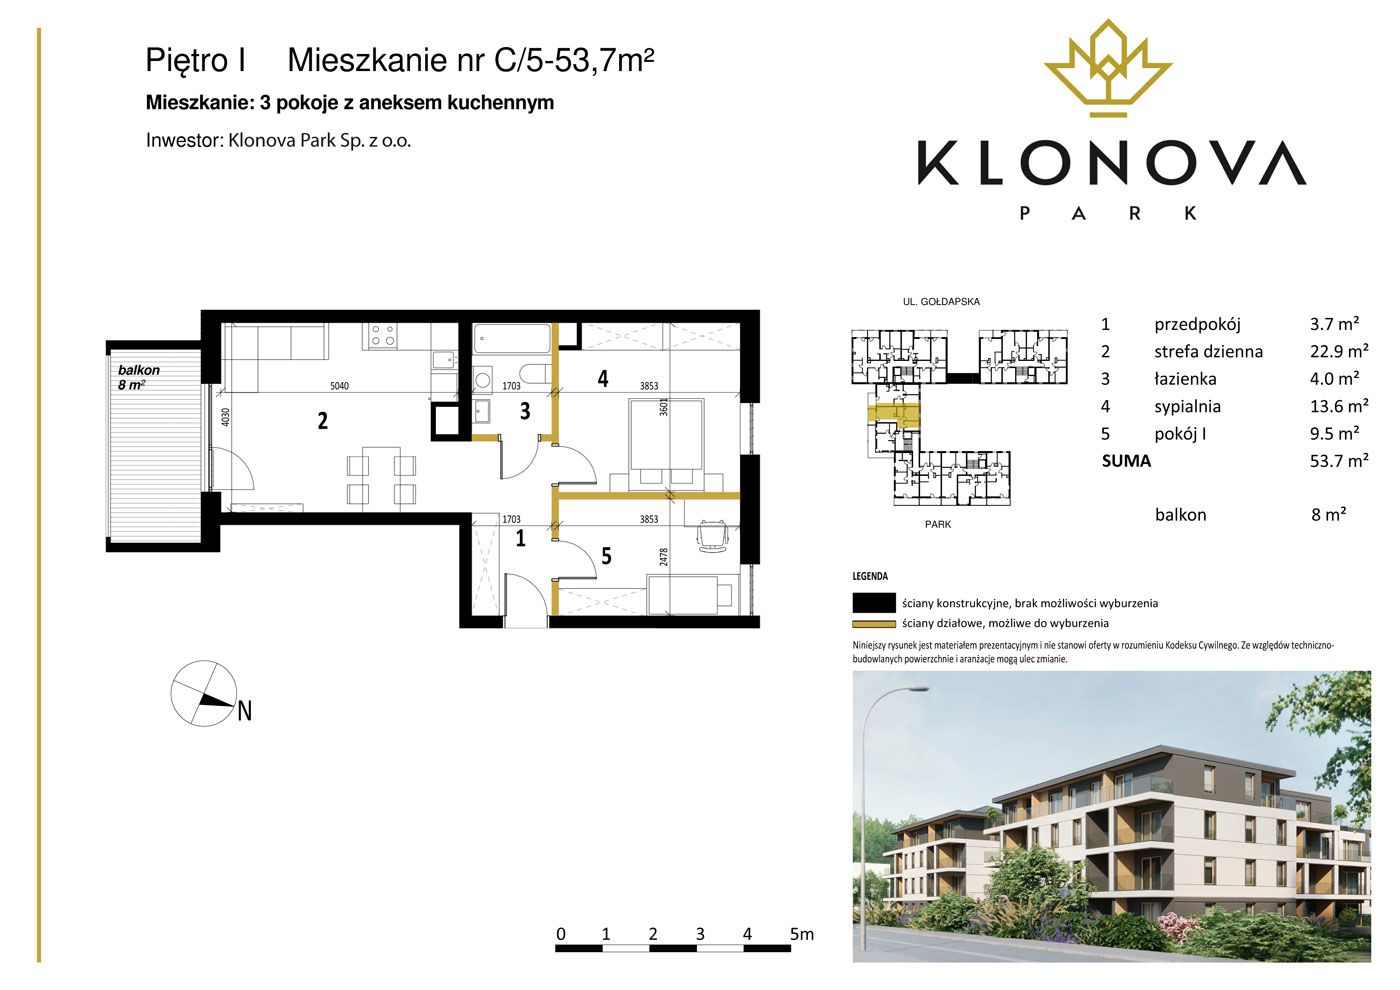 Apartamenty Klonova Park - Plan mieszkania C/5